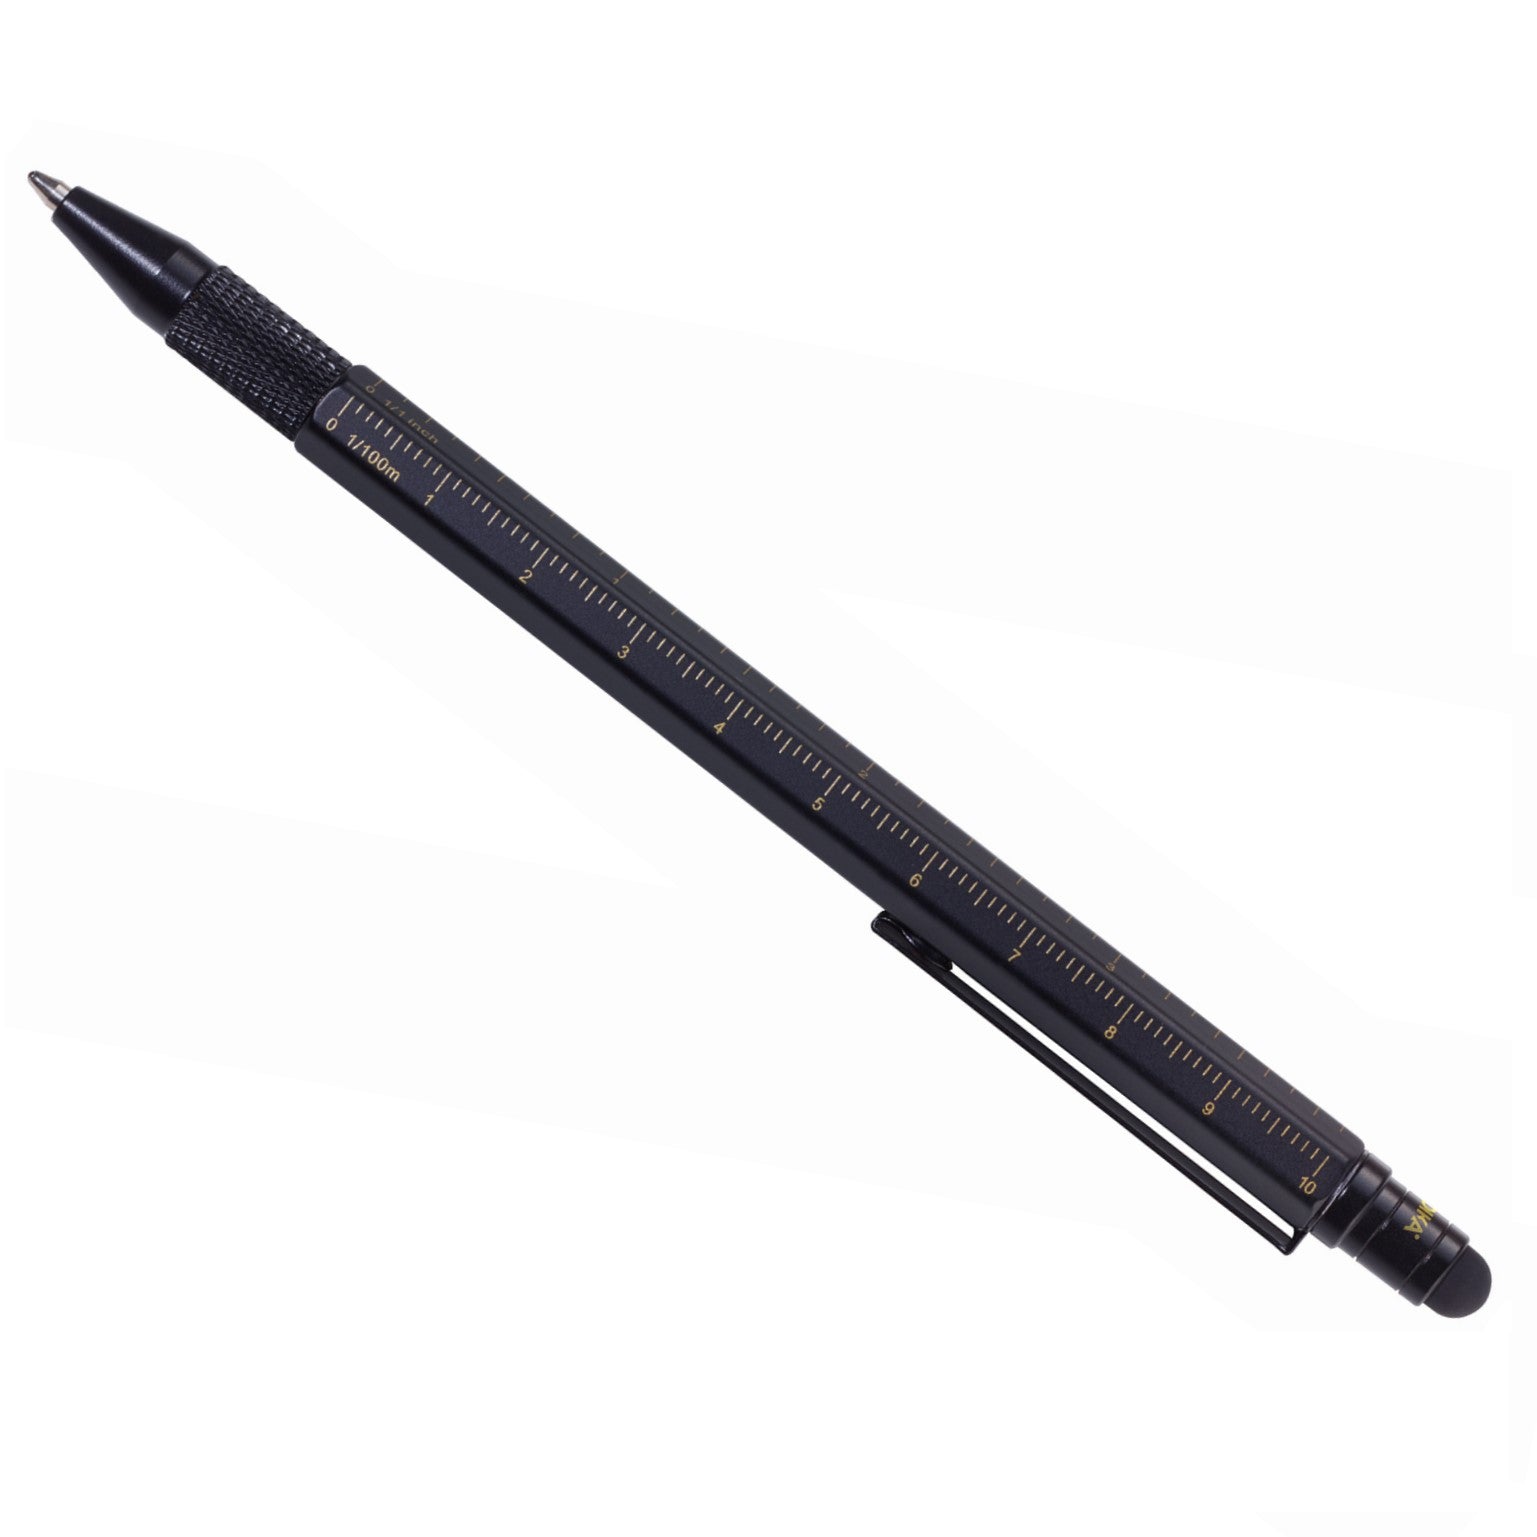 TROIKA Notepad and Pen: Slimpad A6 & Slim Stylus Ballpoint Pen – Black/Gold